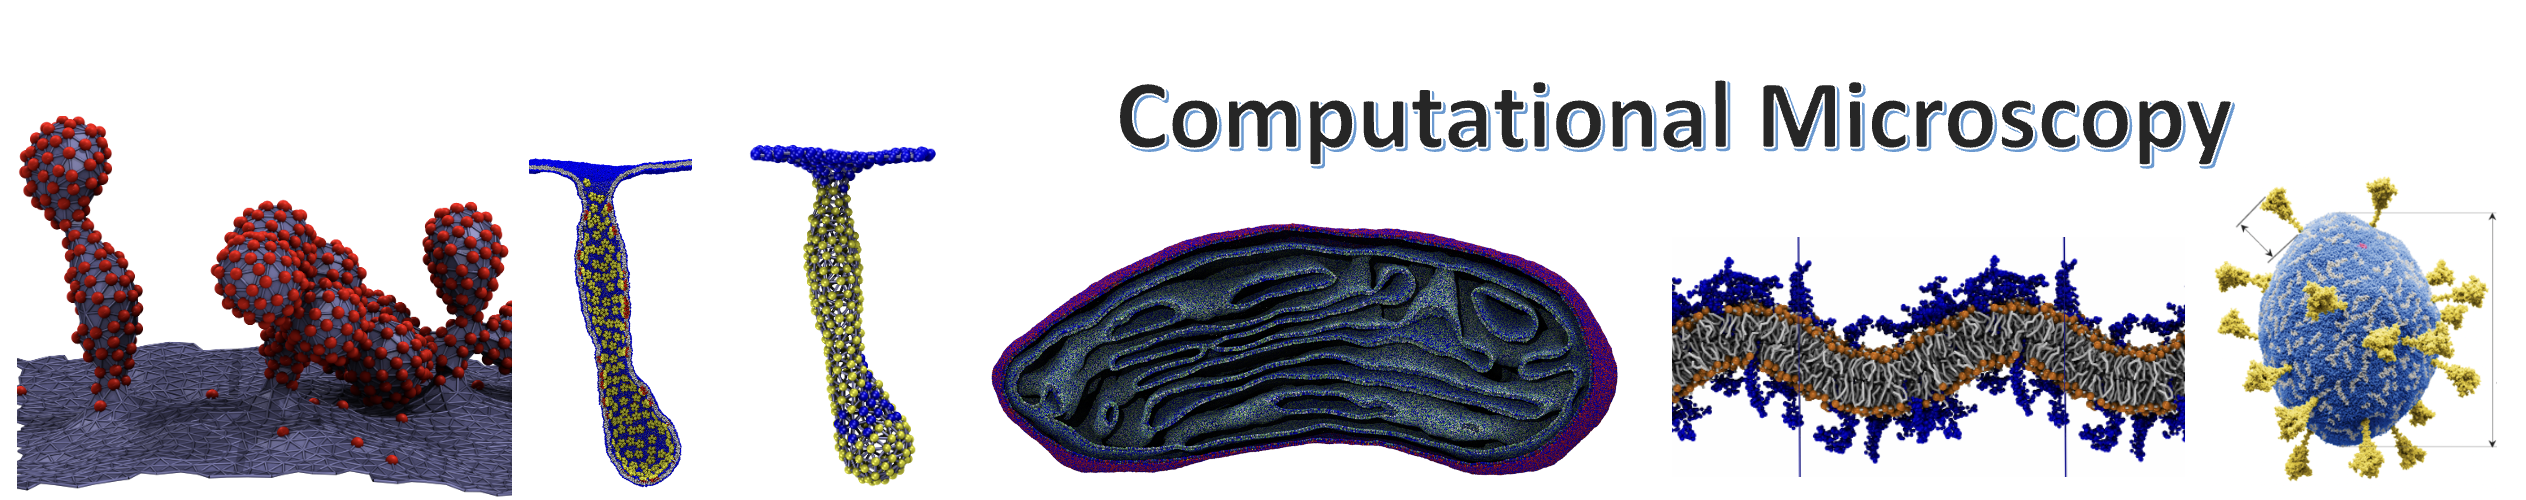 NBI Computational Microscopy Group feature image